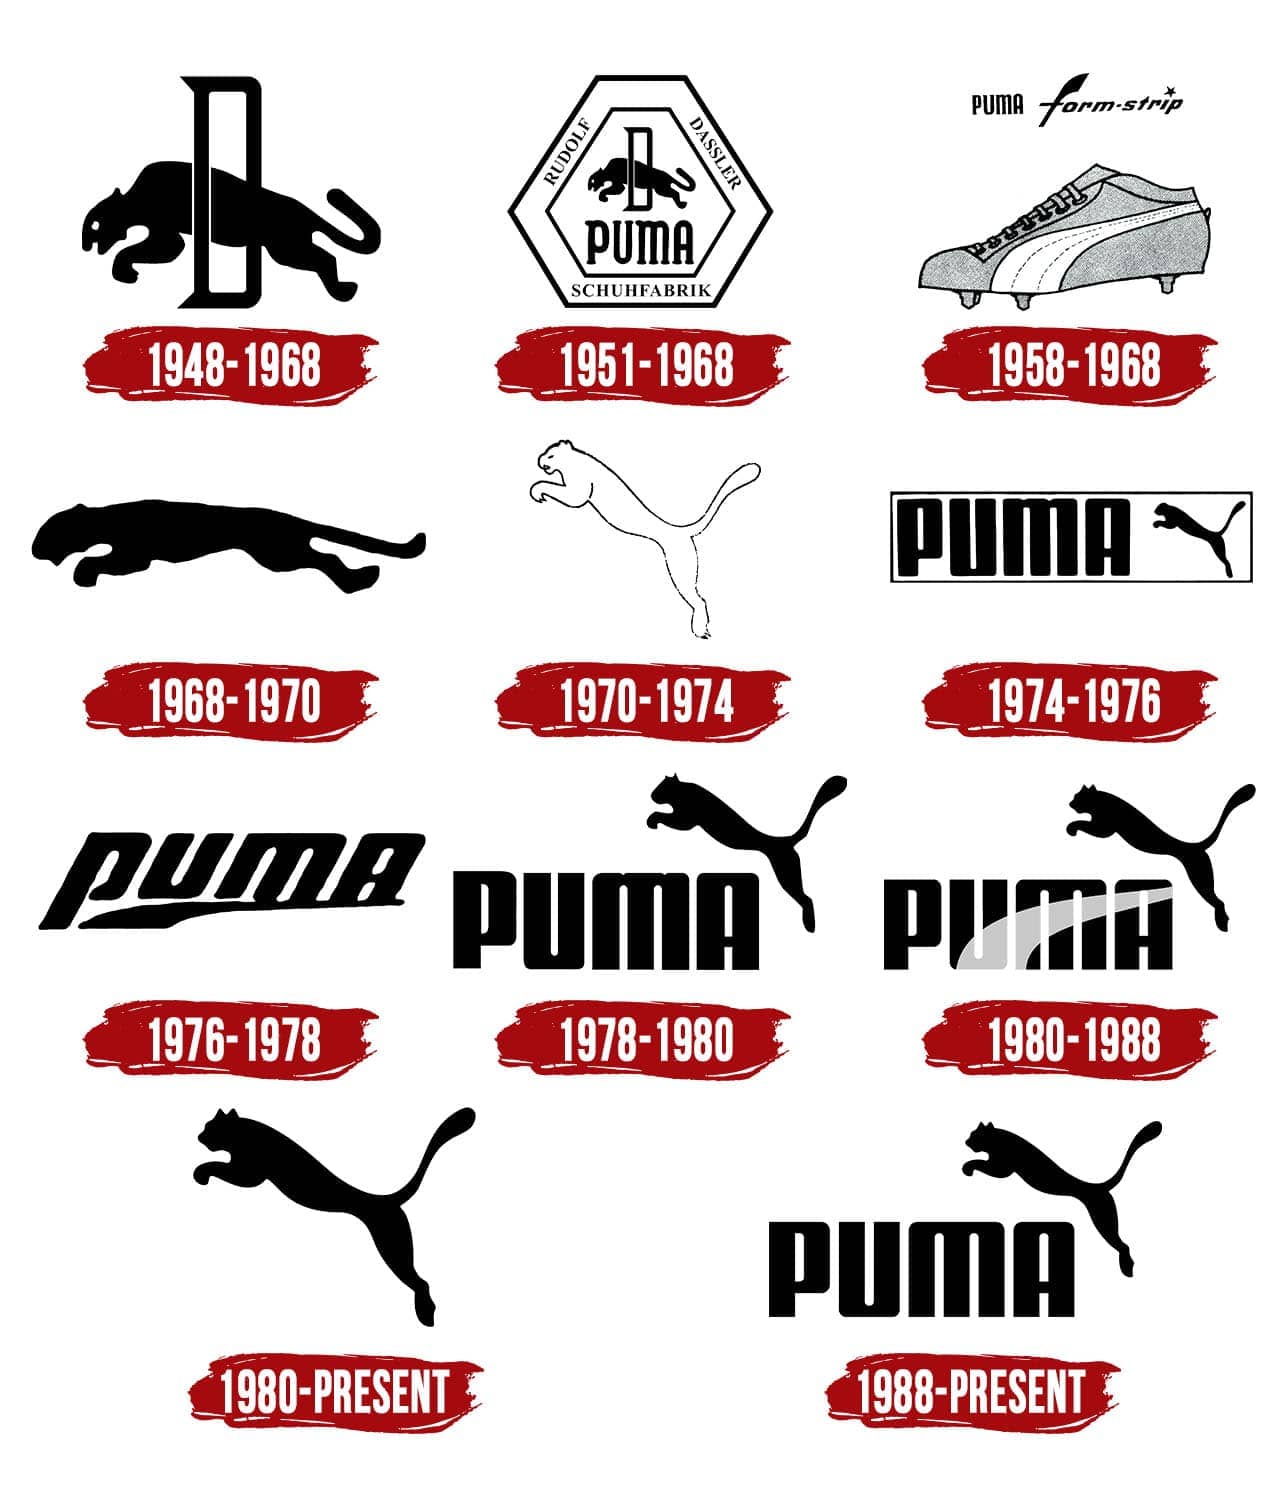 puma history